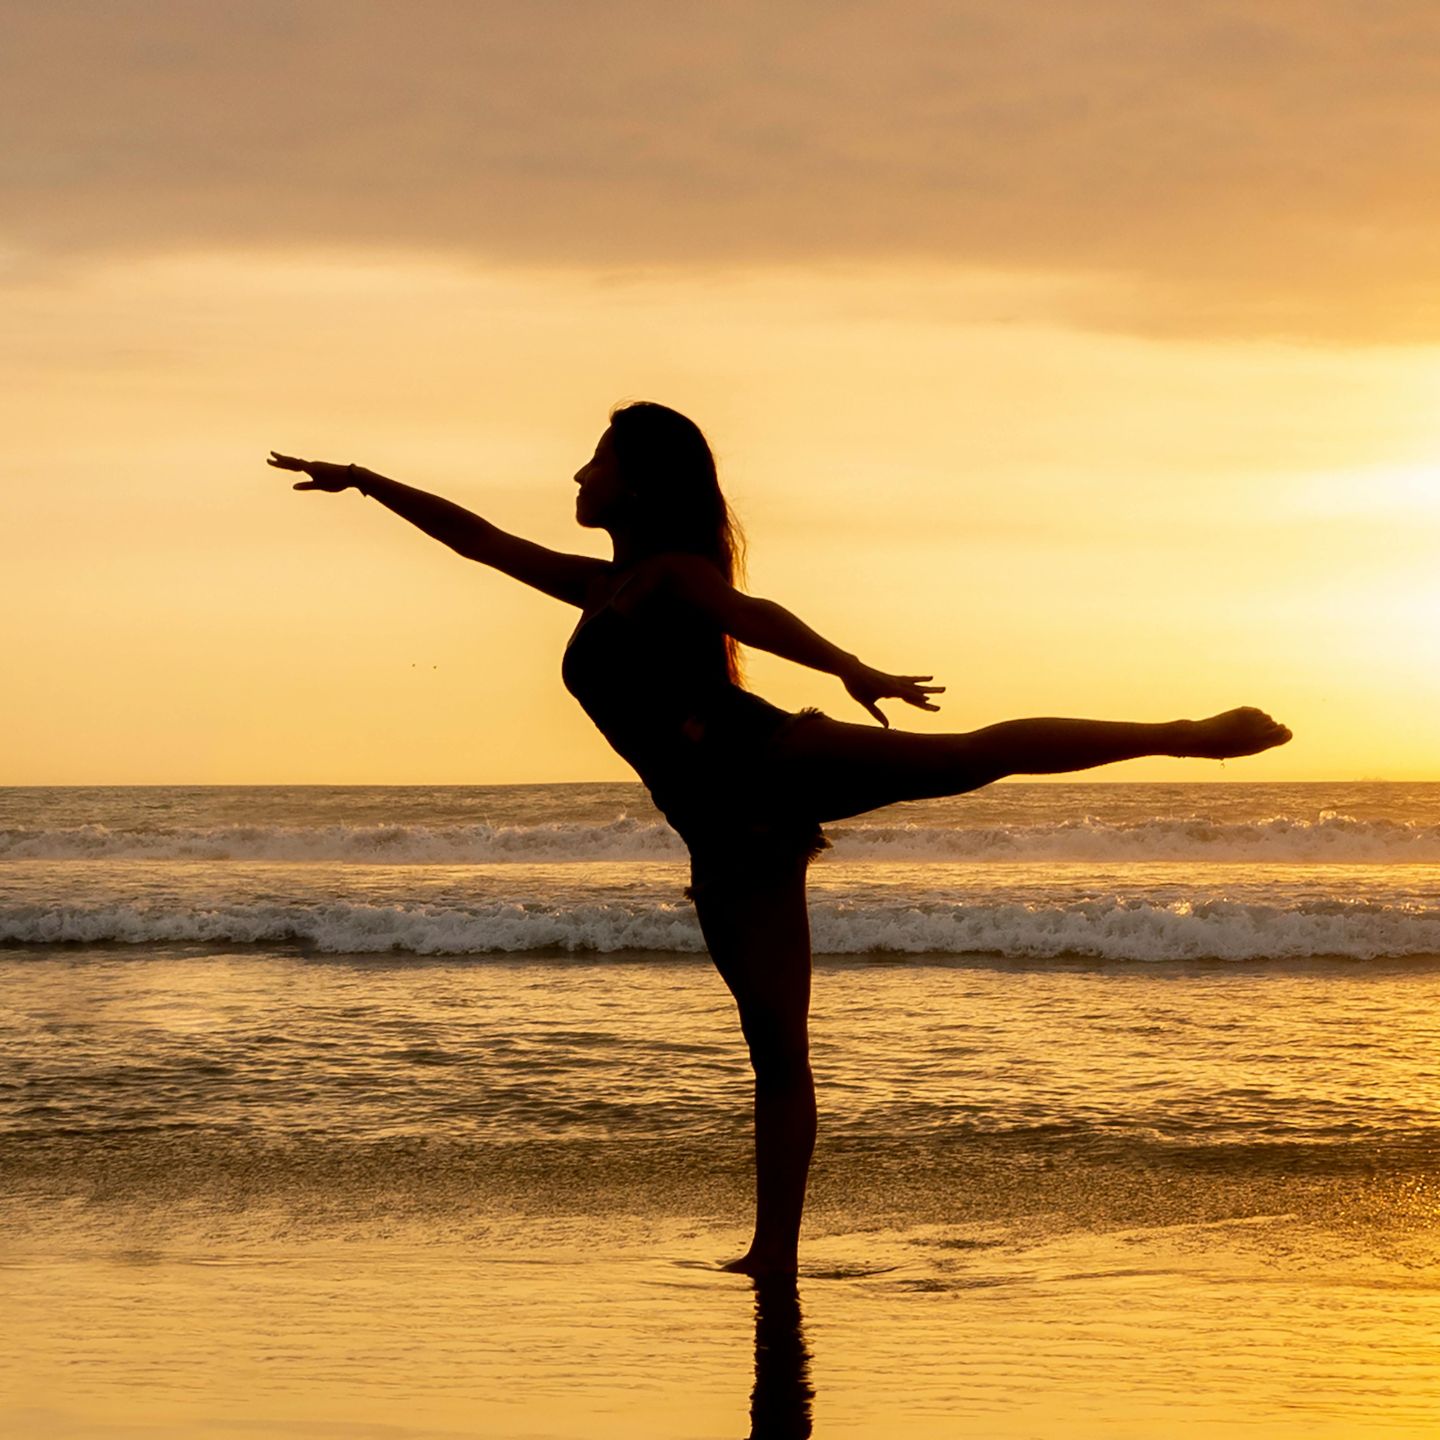 Woman doing a yoga post on a sandy beach while the sun sets